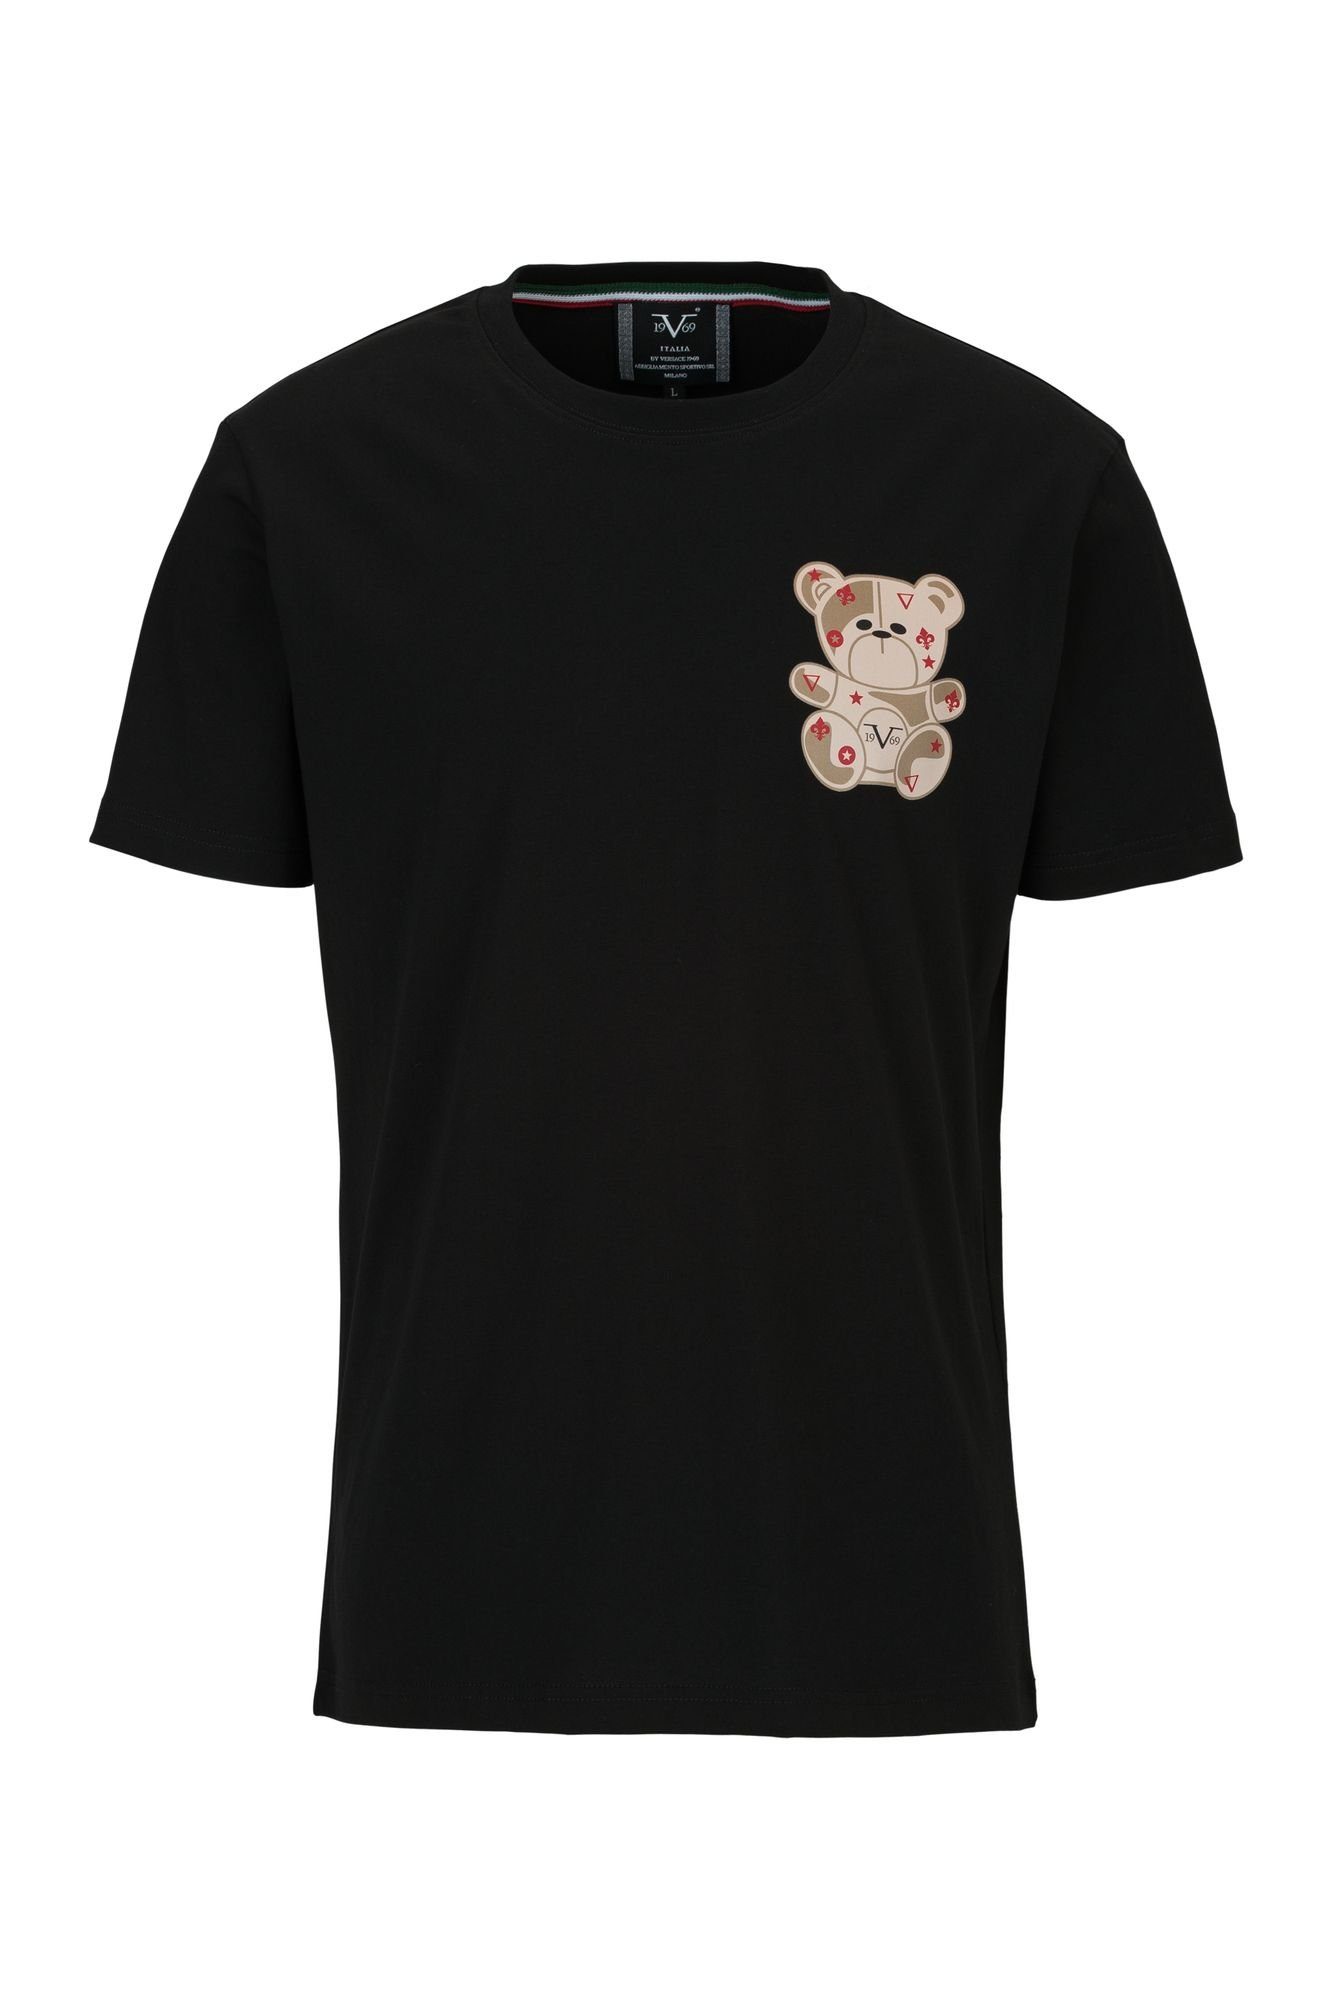 T-Shirt by Print Versace 19V69 Italia Teddy